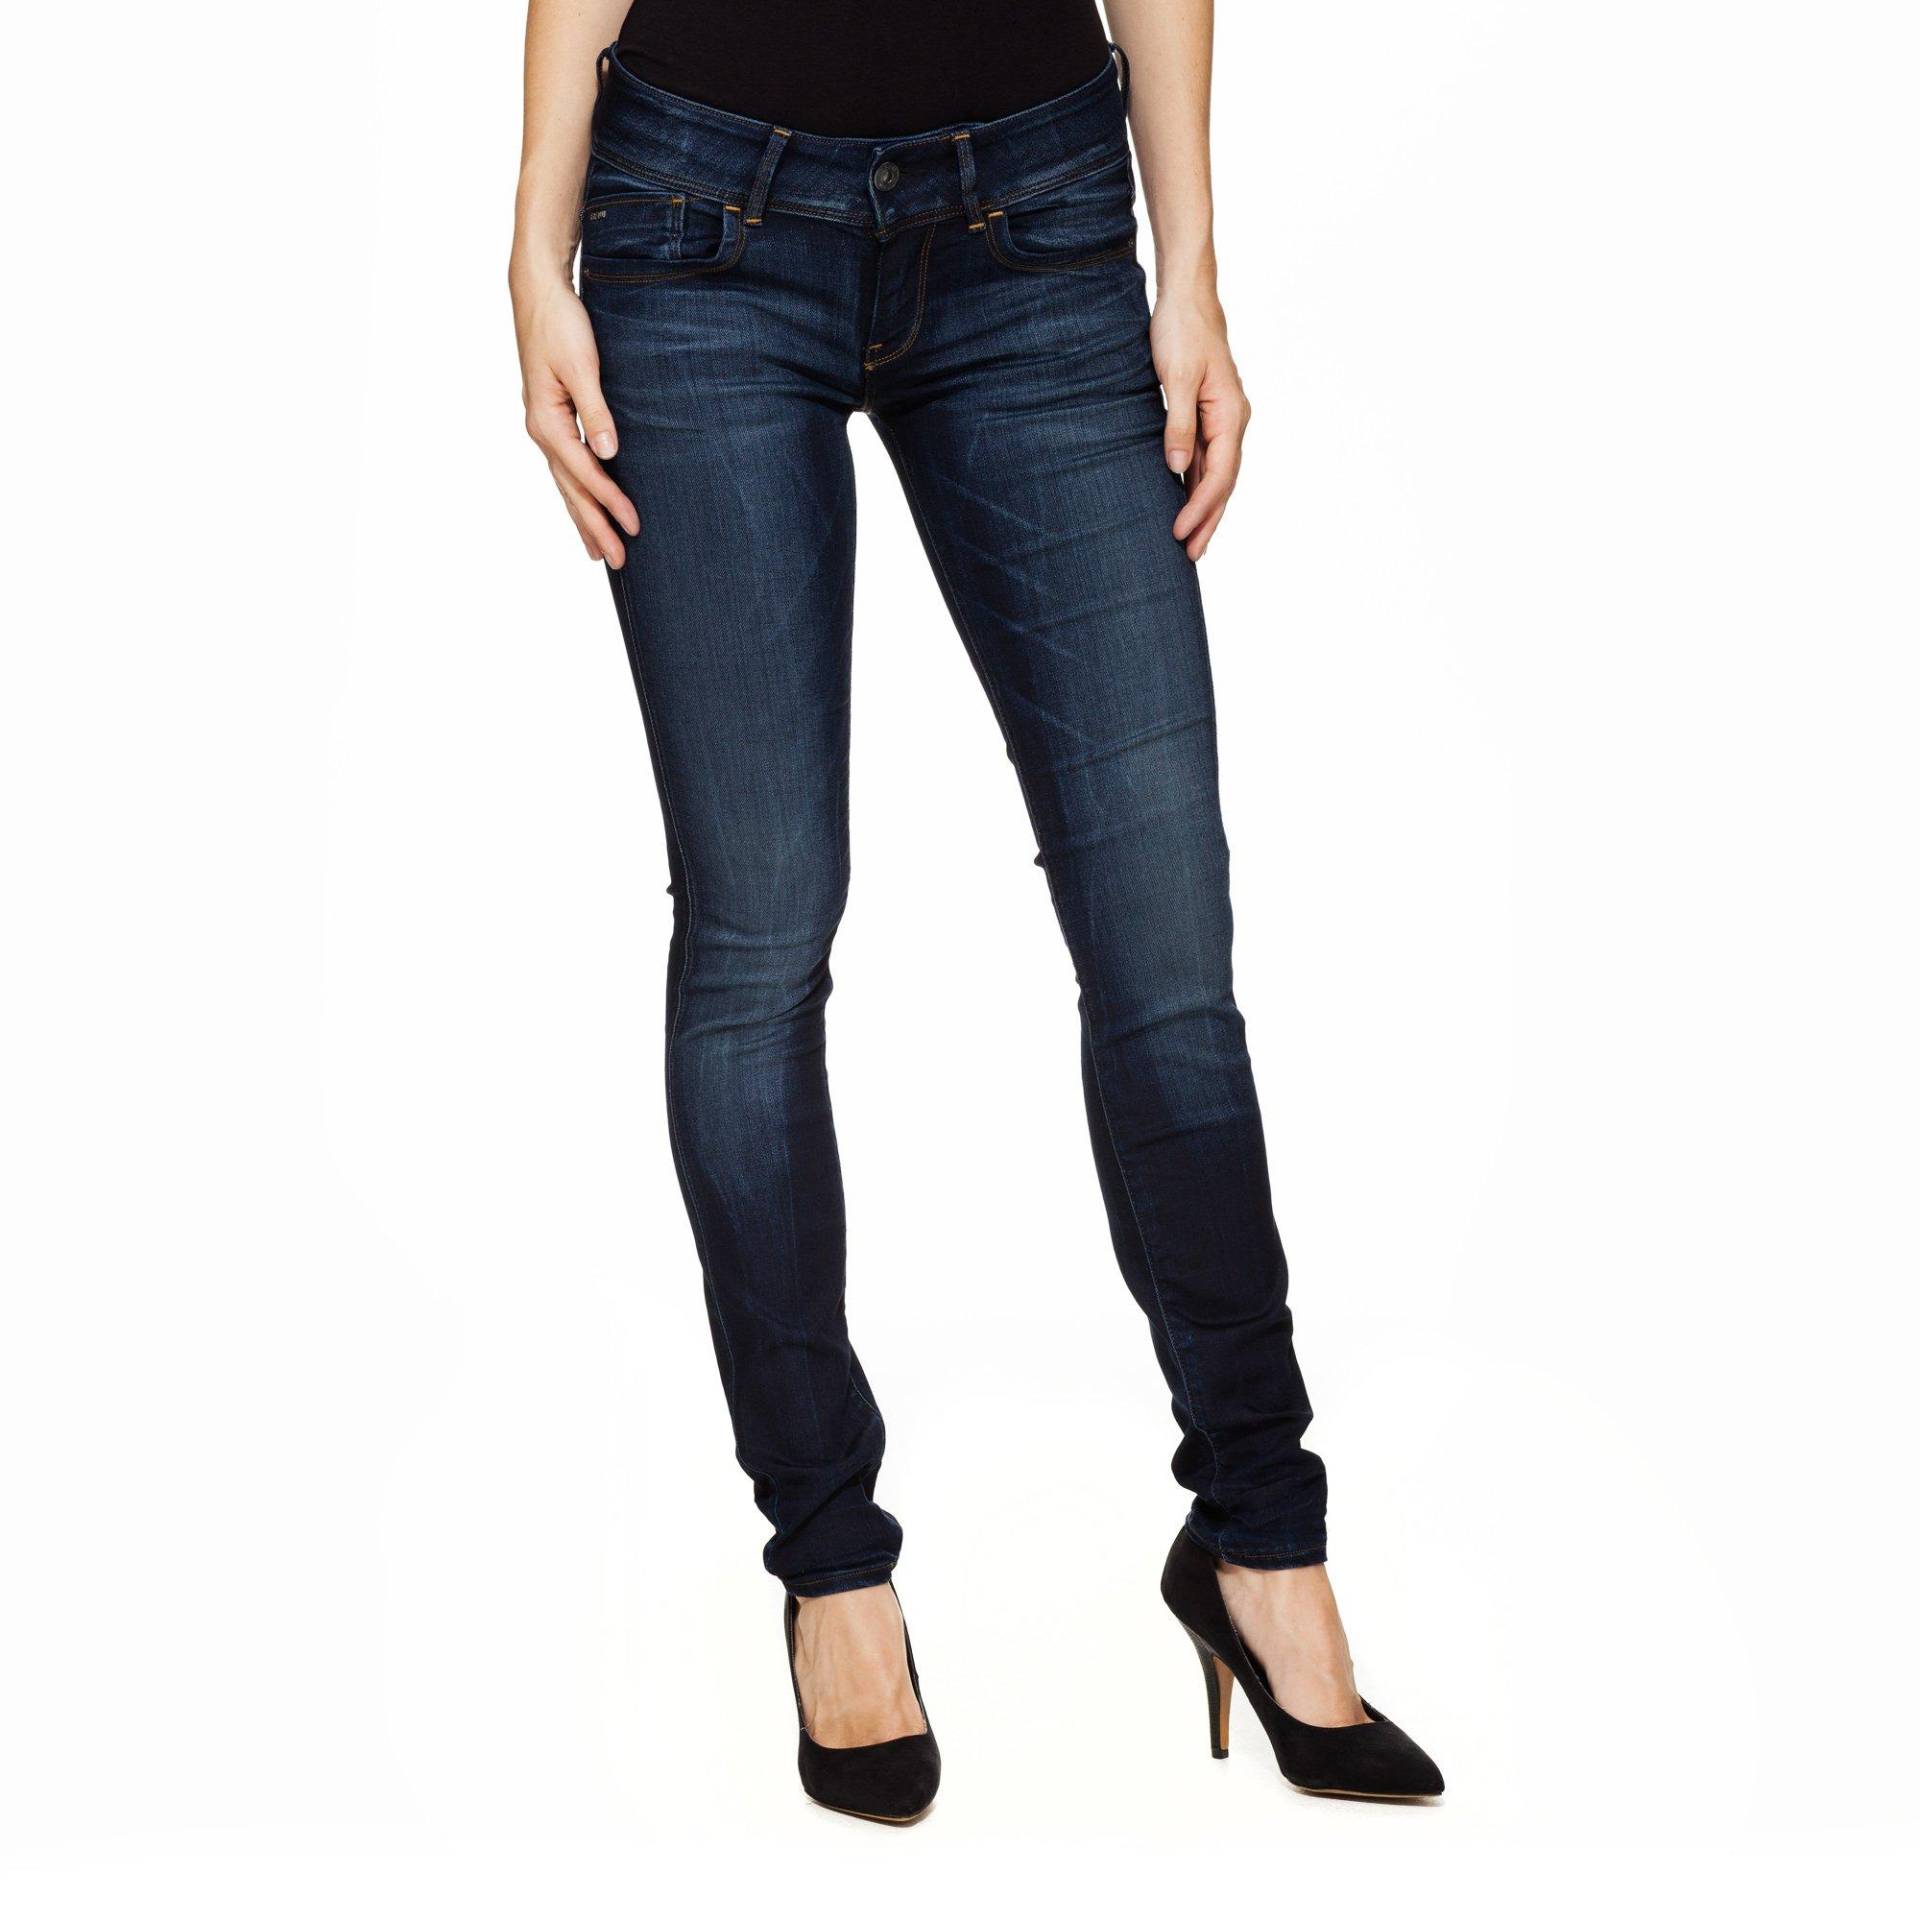 Jeans, Skinny Fit Damen Blau Denim W31 von G-STAR